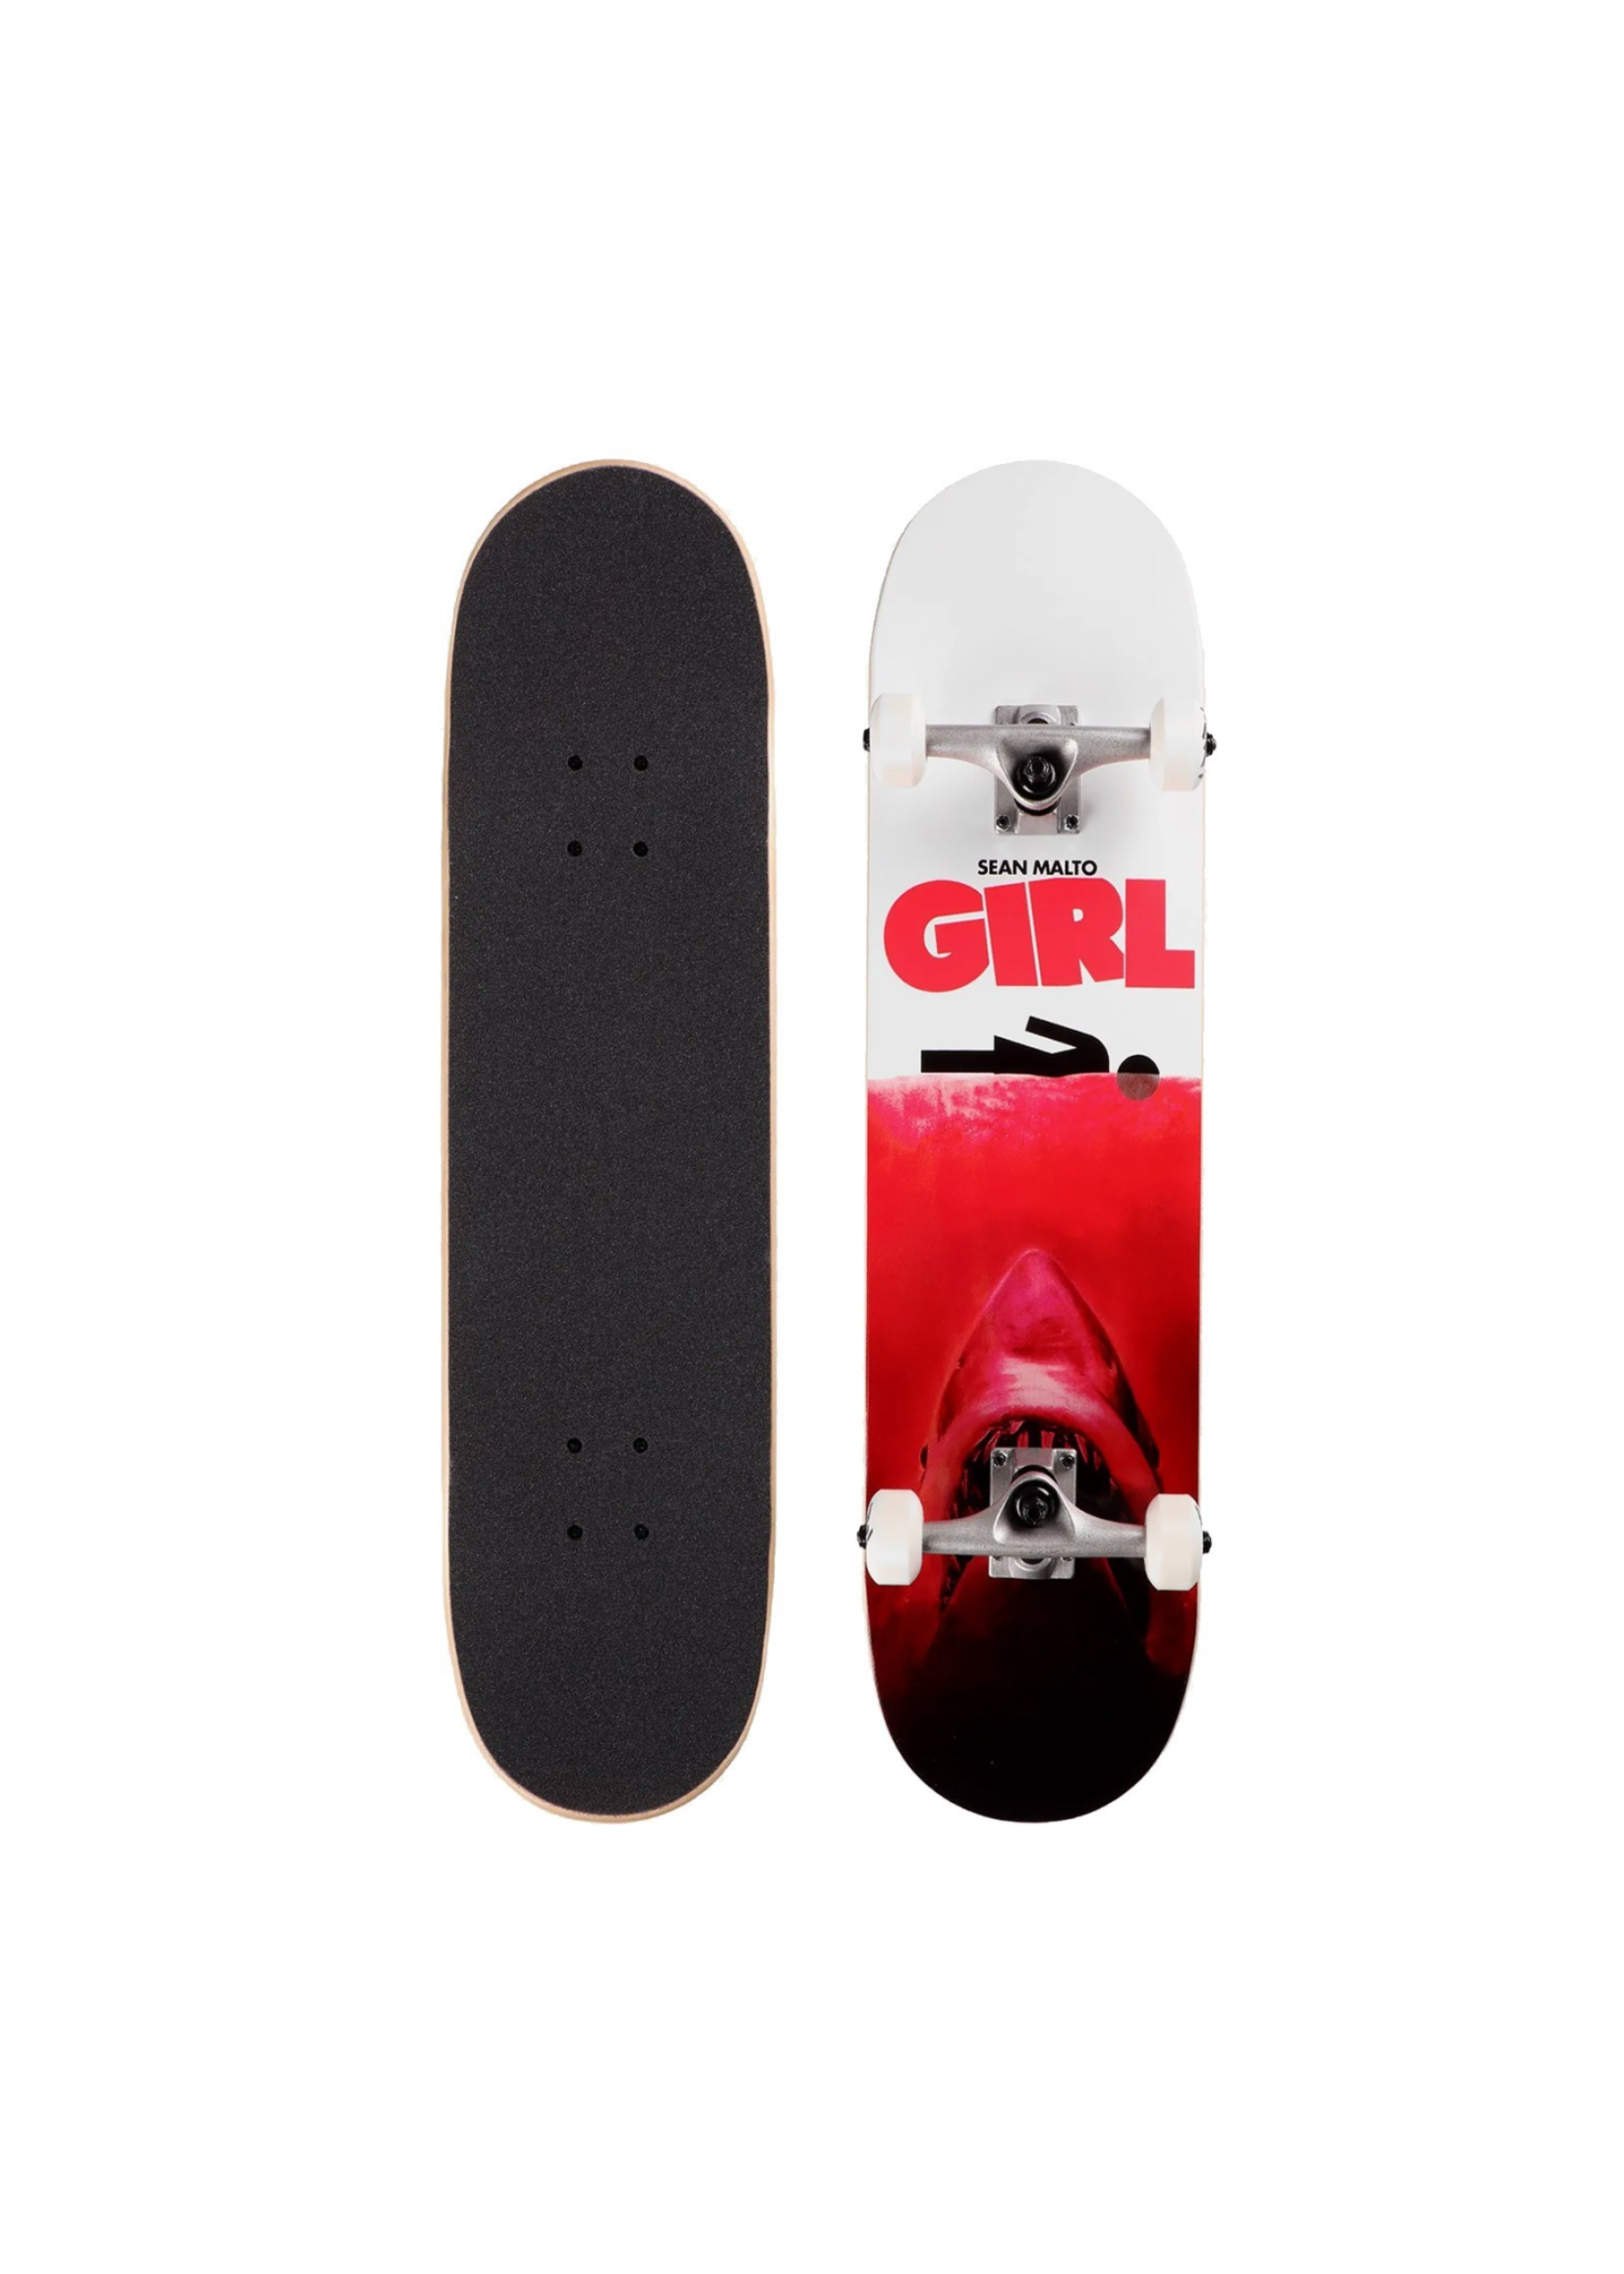 Girl Skateboards GIRL - Sean Malto - Shark Attack Complete - 8.0"